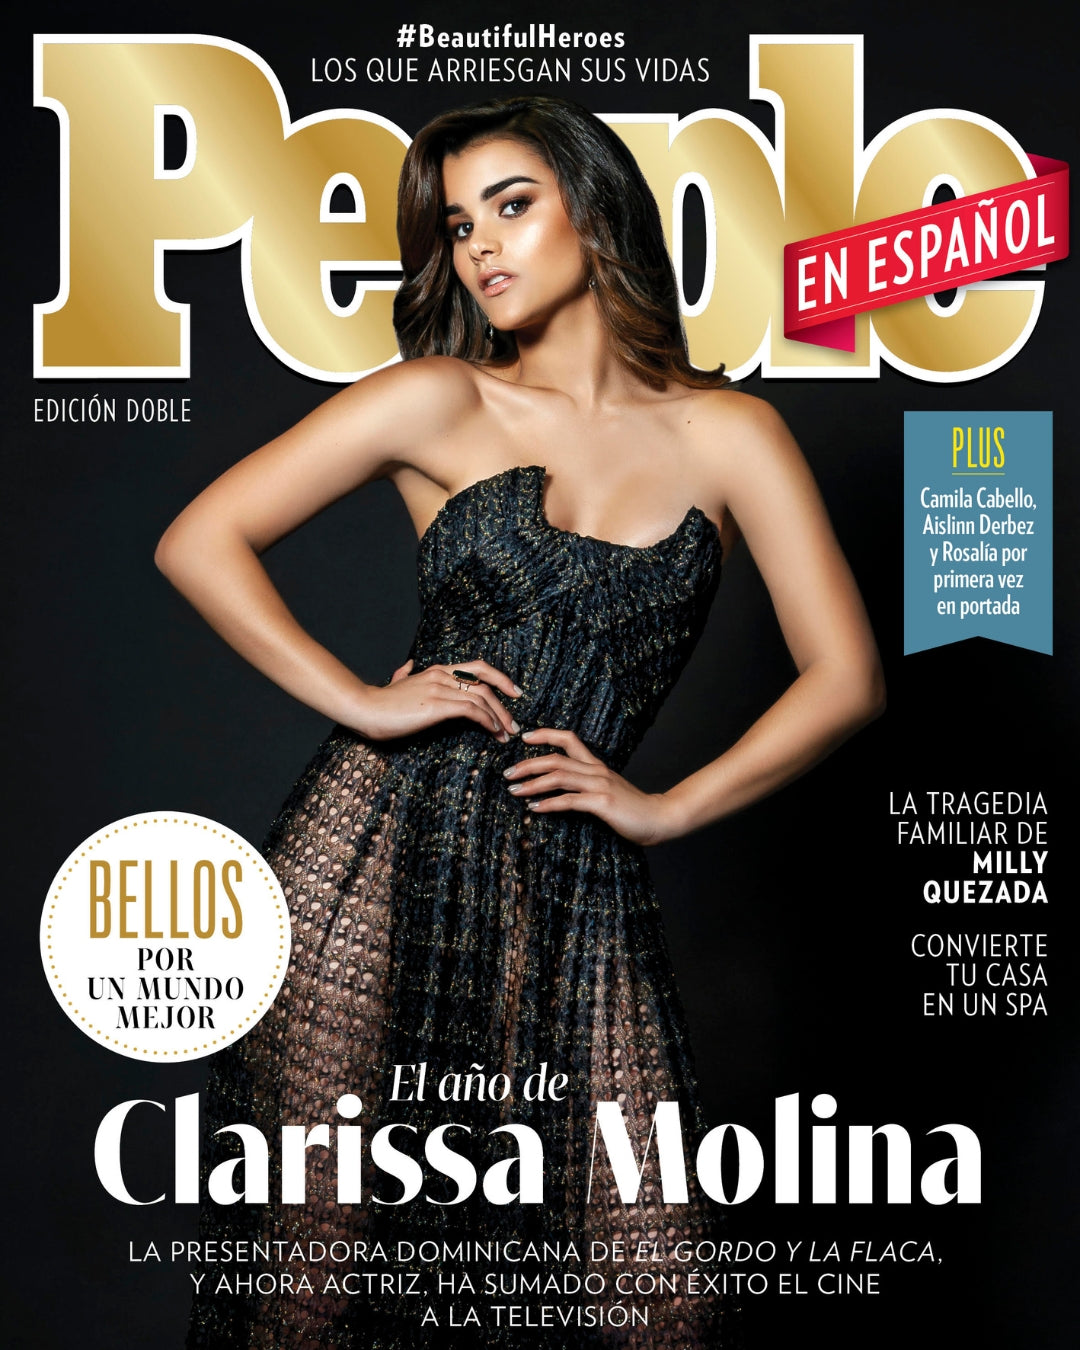 Clarissa Molina pagina web - noticia - people